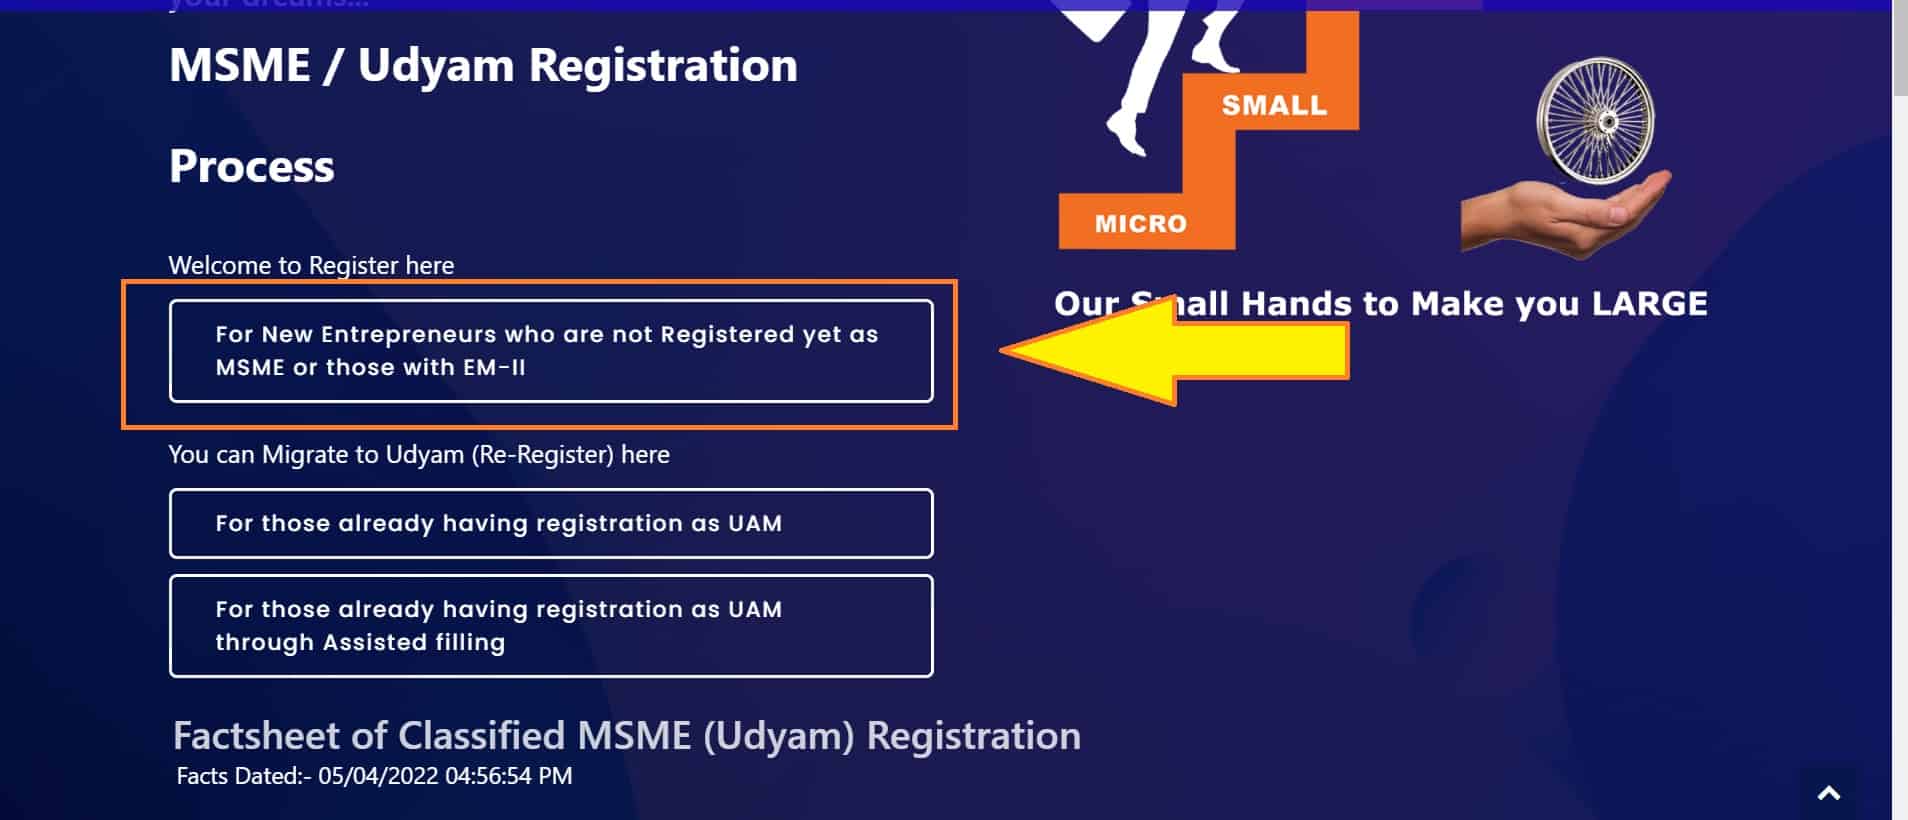 ऑनलाइन आवेदन प्रक्रिया Udyog Aadhaar MSME Registration online process, 